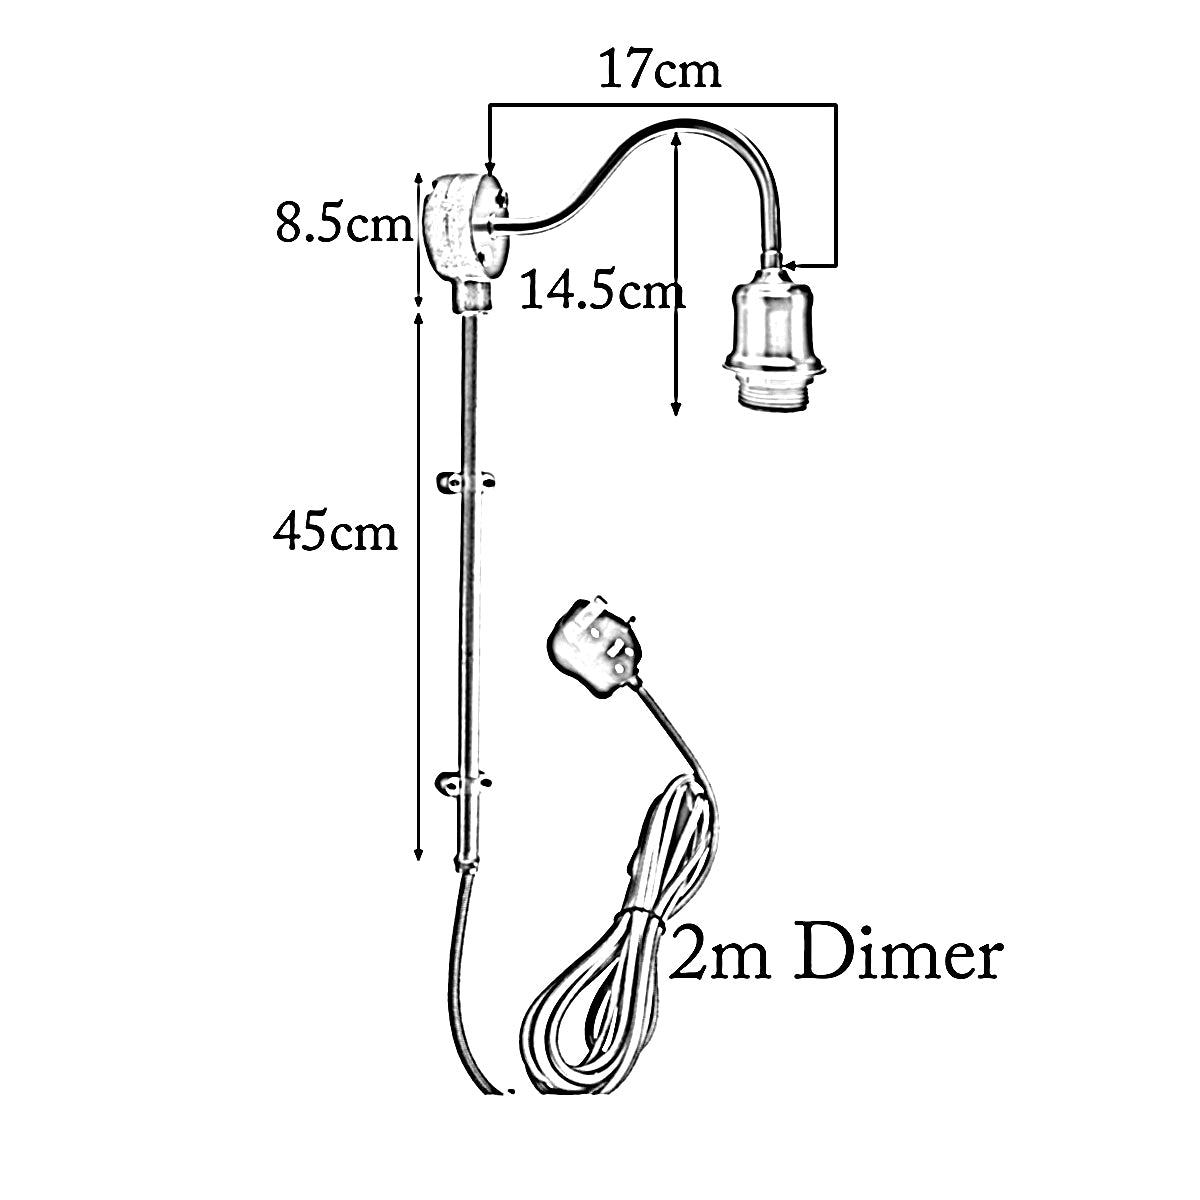 2m Plug with Dimmer Switch Fabric Flex Cable Plug In Pendant Pipe Light Set Black~1606 - LEDSone UK Ltd